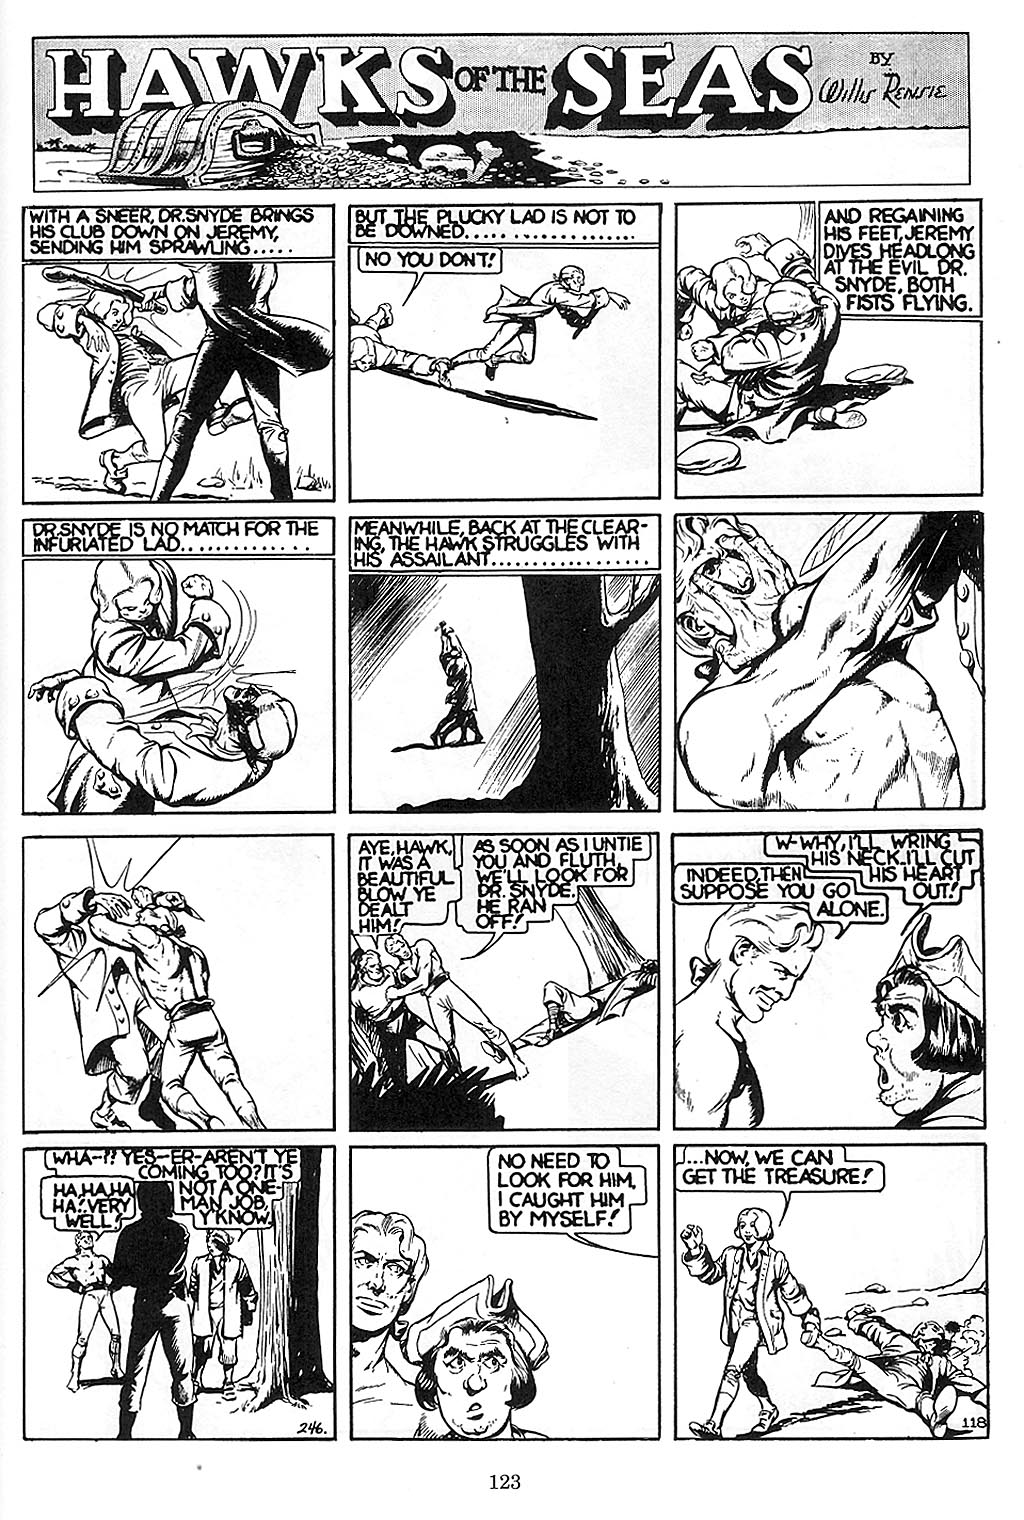 Read online Will Eisner's Hawks of the Seas comic -  Issue # TPB - 124